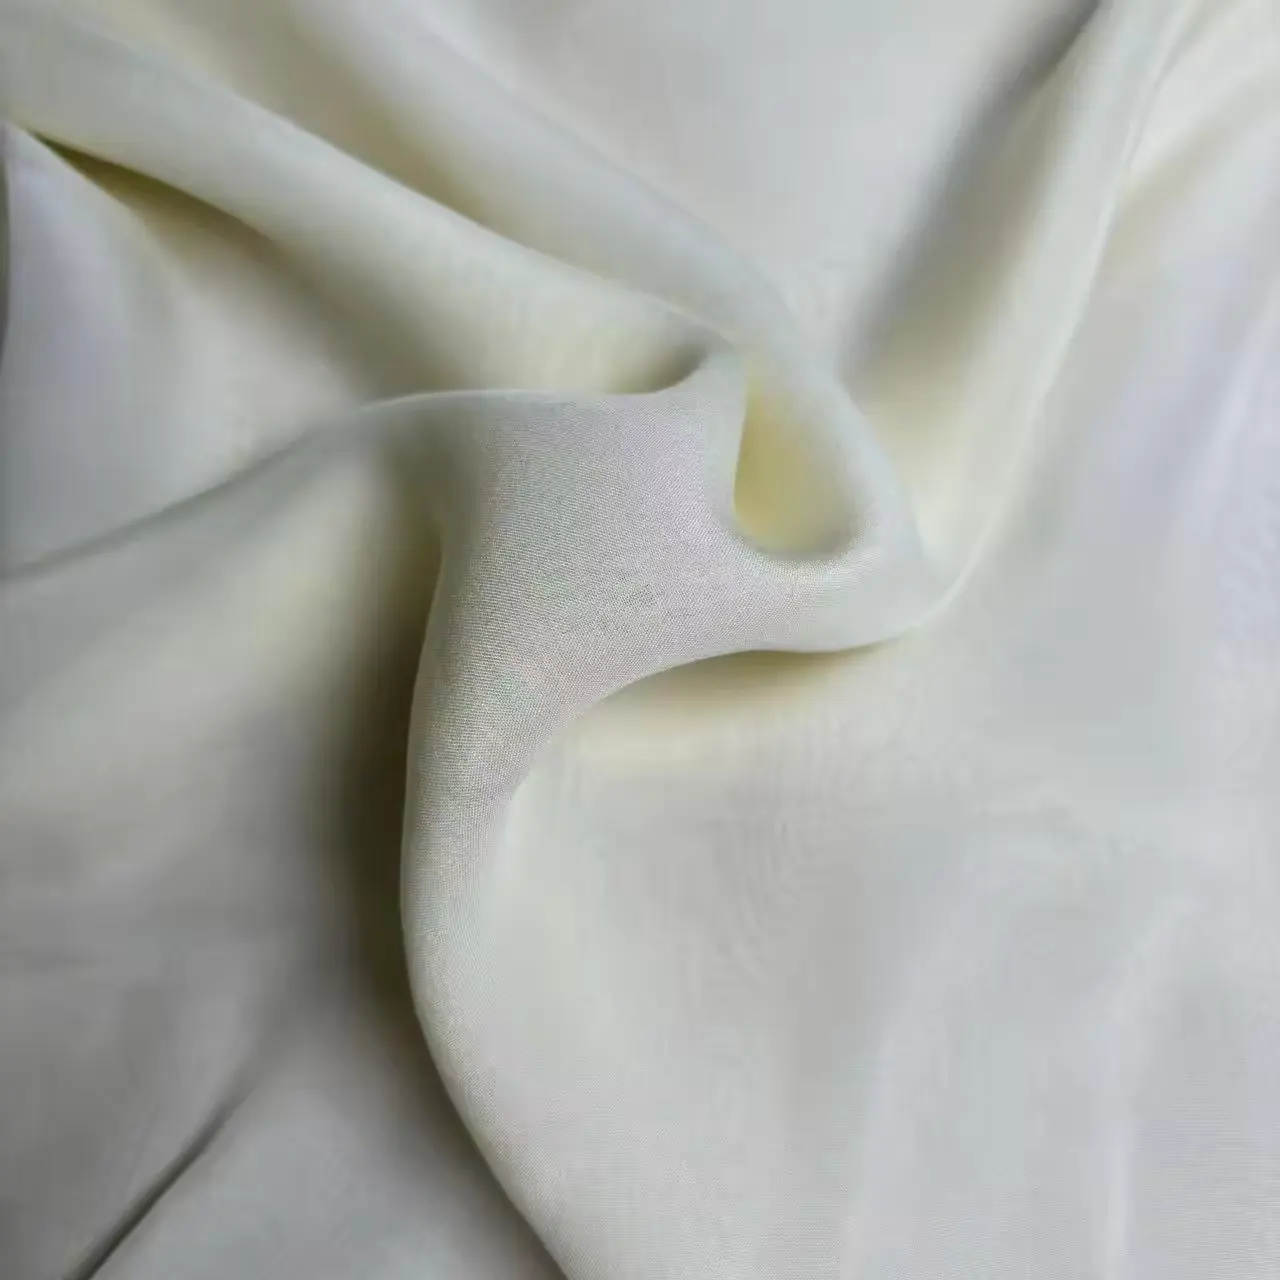 10 मिमी से 40 मिमी बिना रंगा हुआ प्राकृतिक रंग 100 शुद्ध रेशम साटन कस्टम मुद्रित शुद्ध कपड़े क्रेप डी चाइन फैब्रिक शुद्ध रेशम कपड़ा